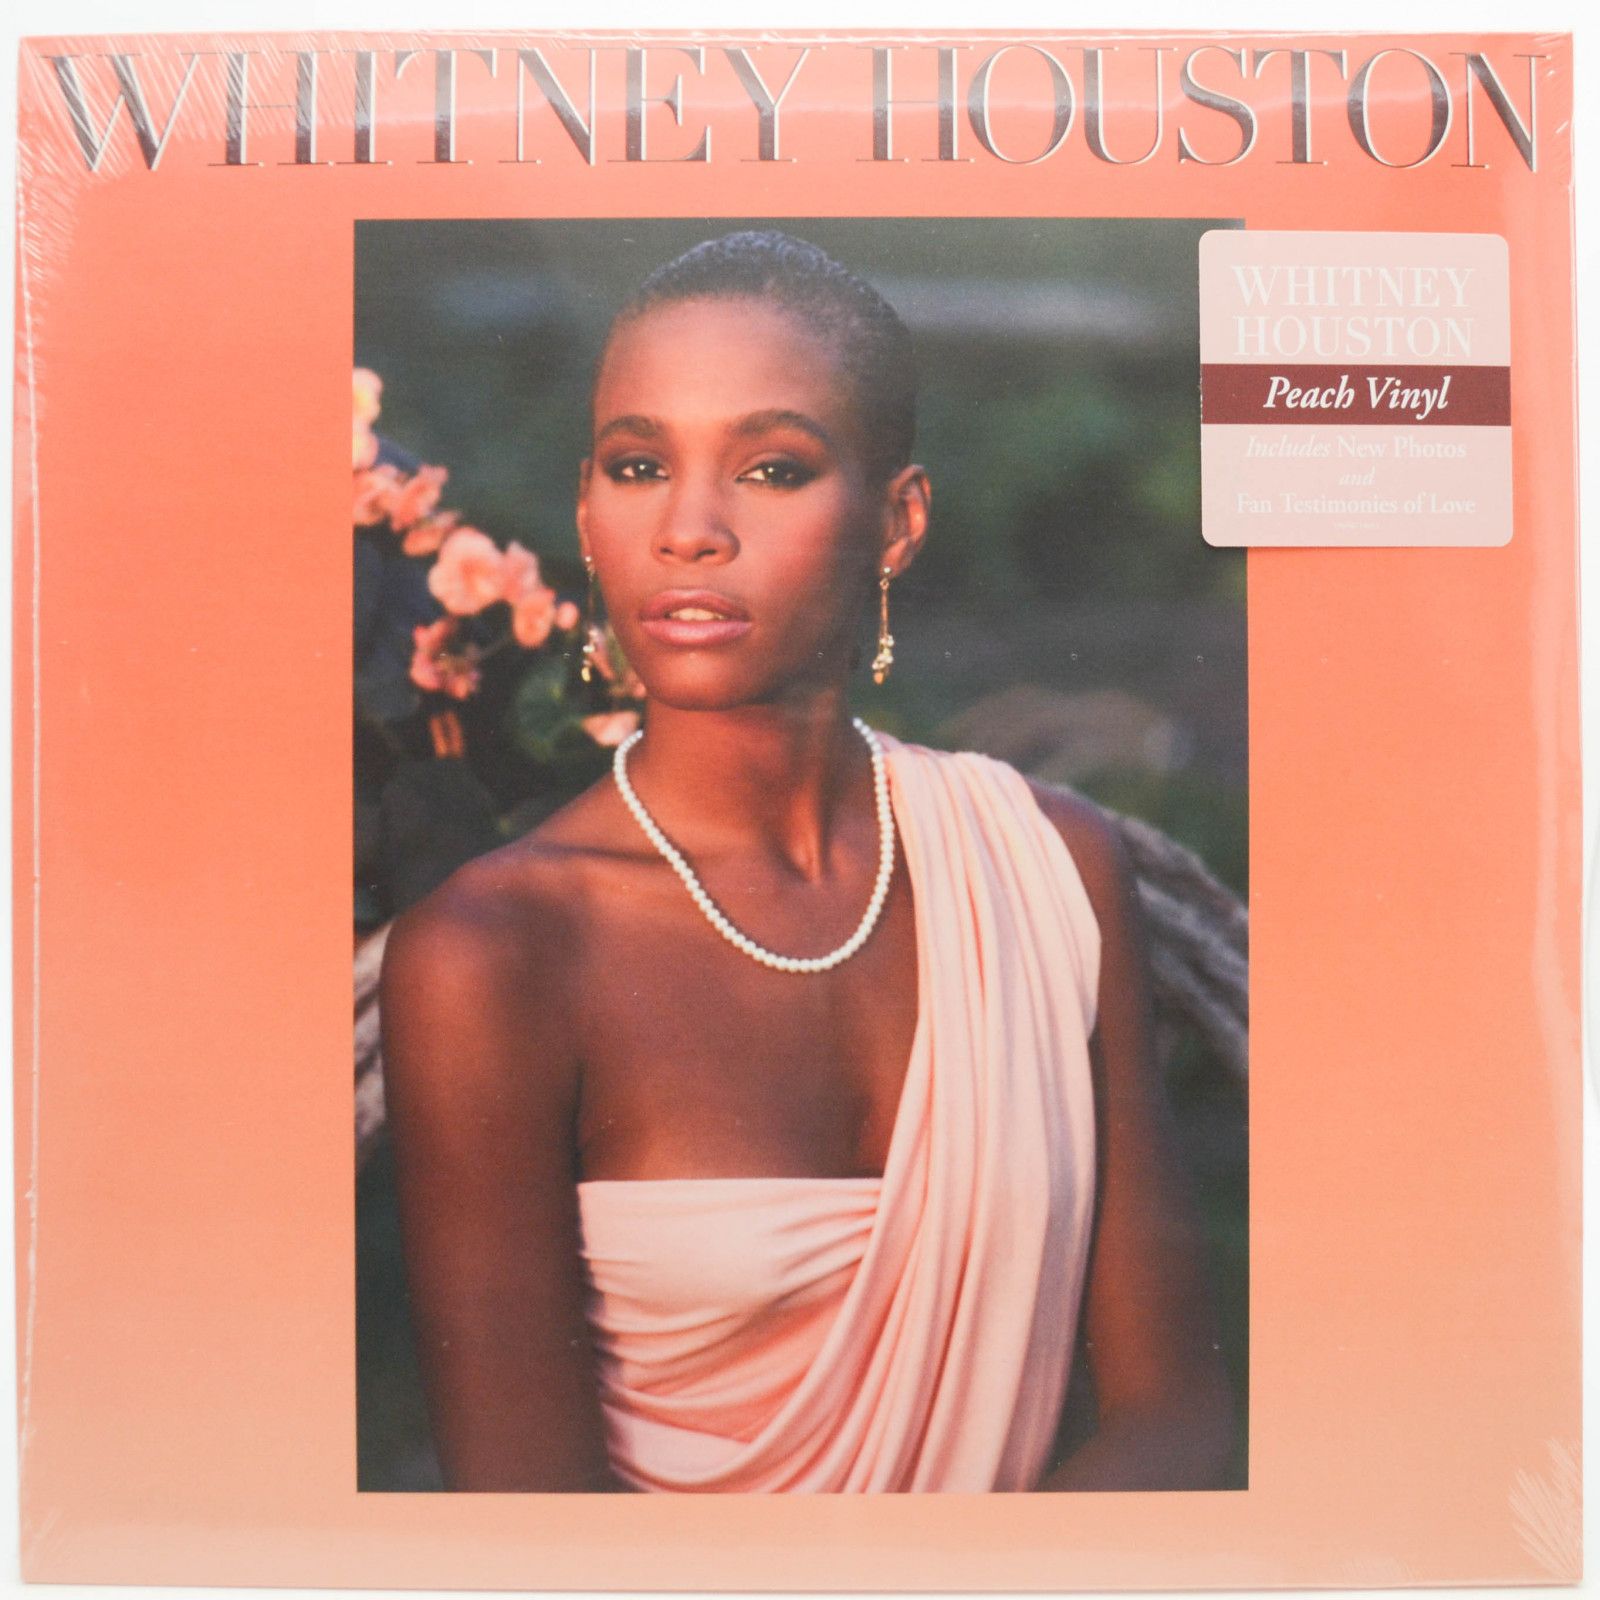 Whitney Houston — Whitney Houston, 1985